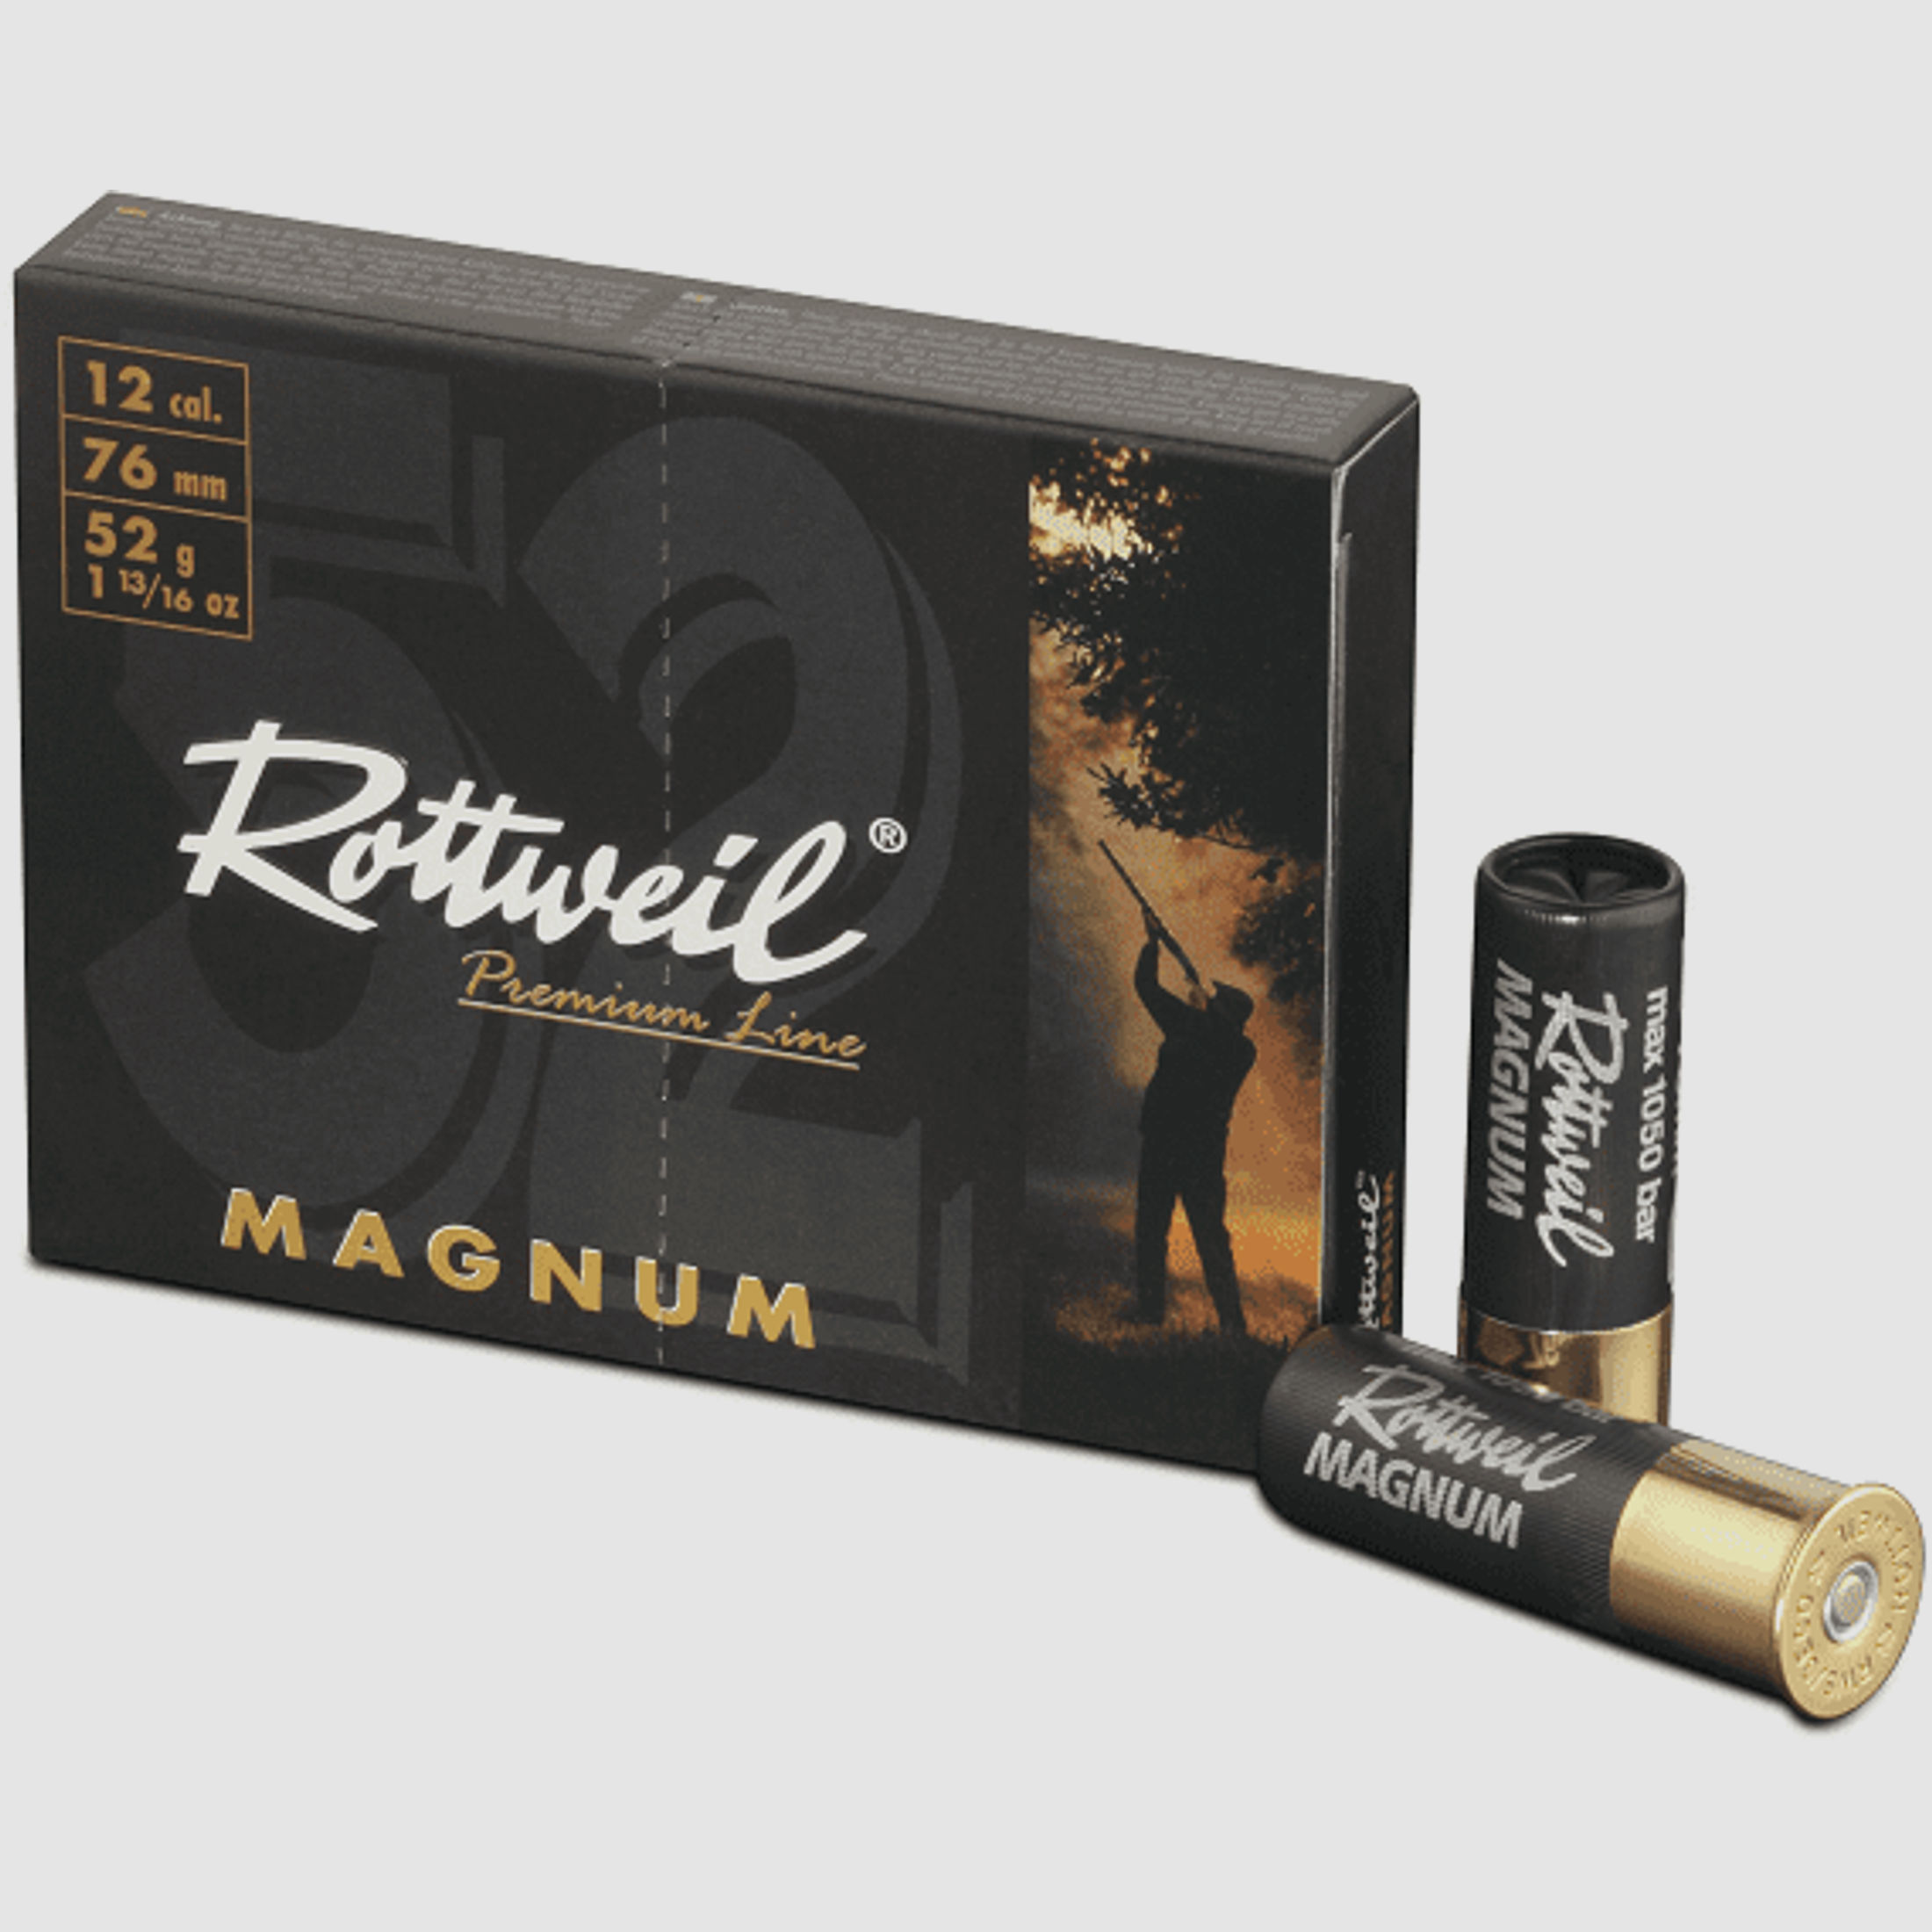 Rottweil Magnum 12/76 52g. 3,7mm